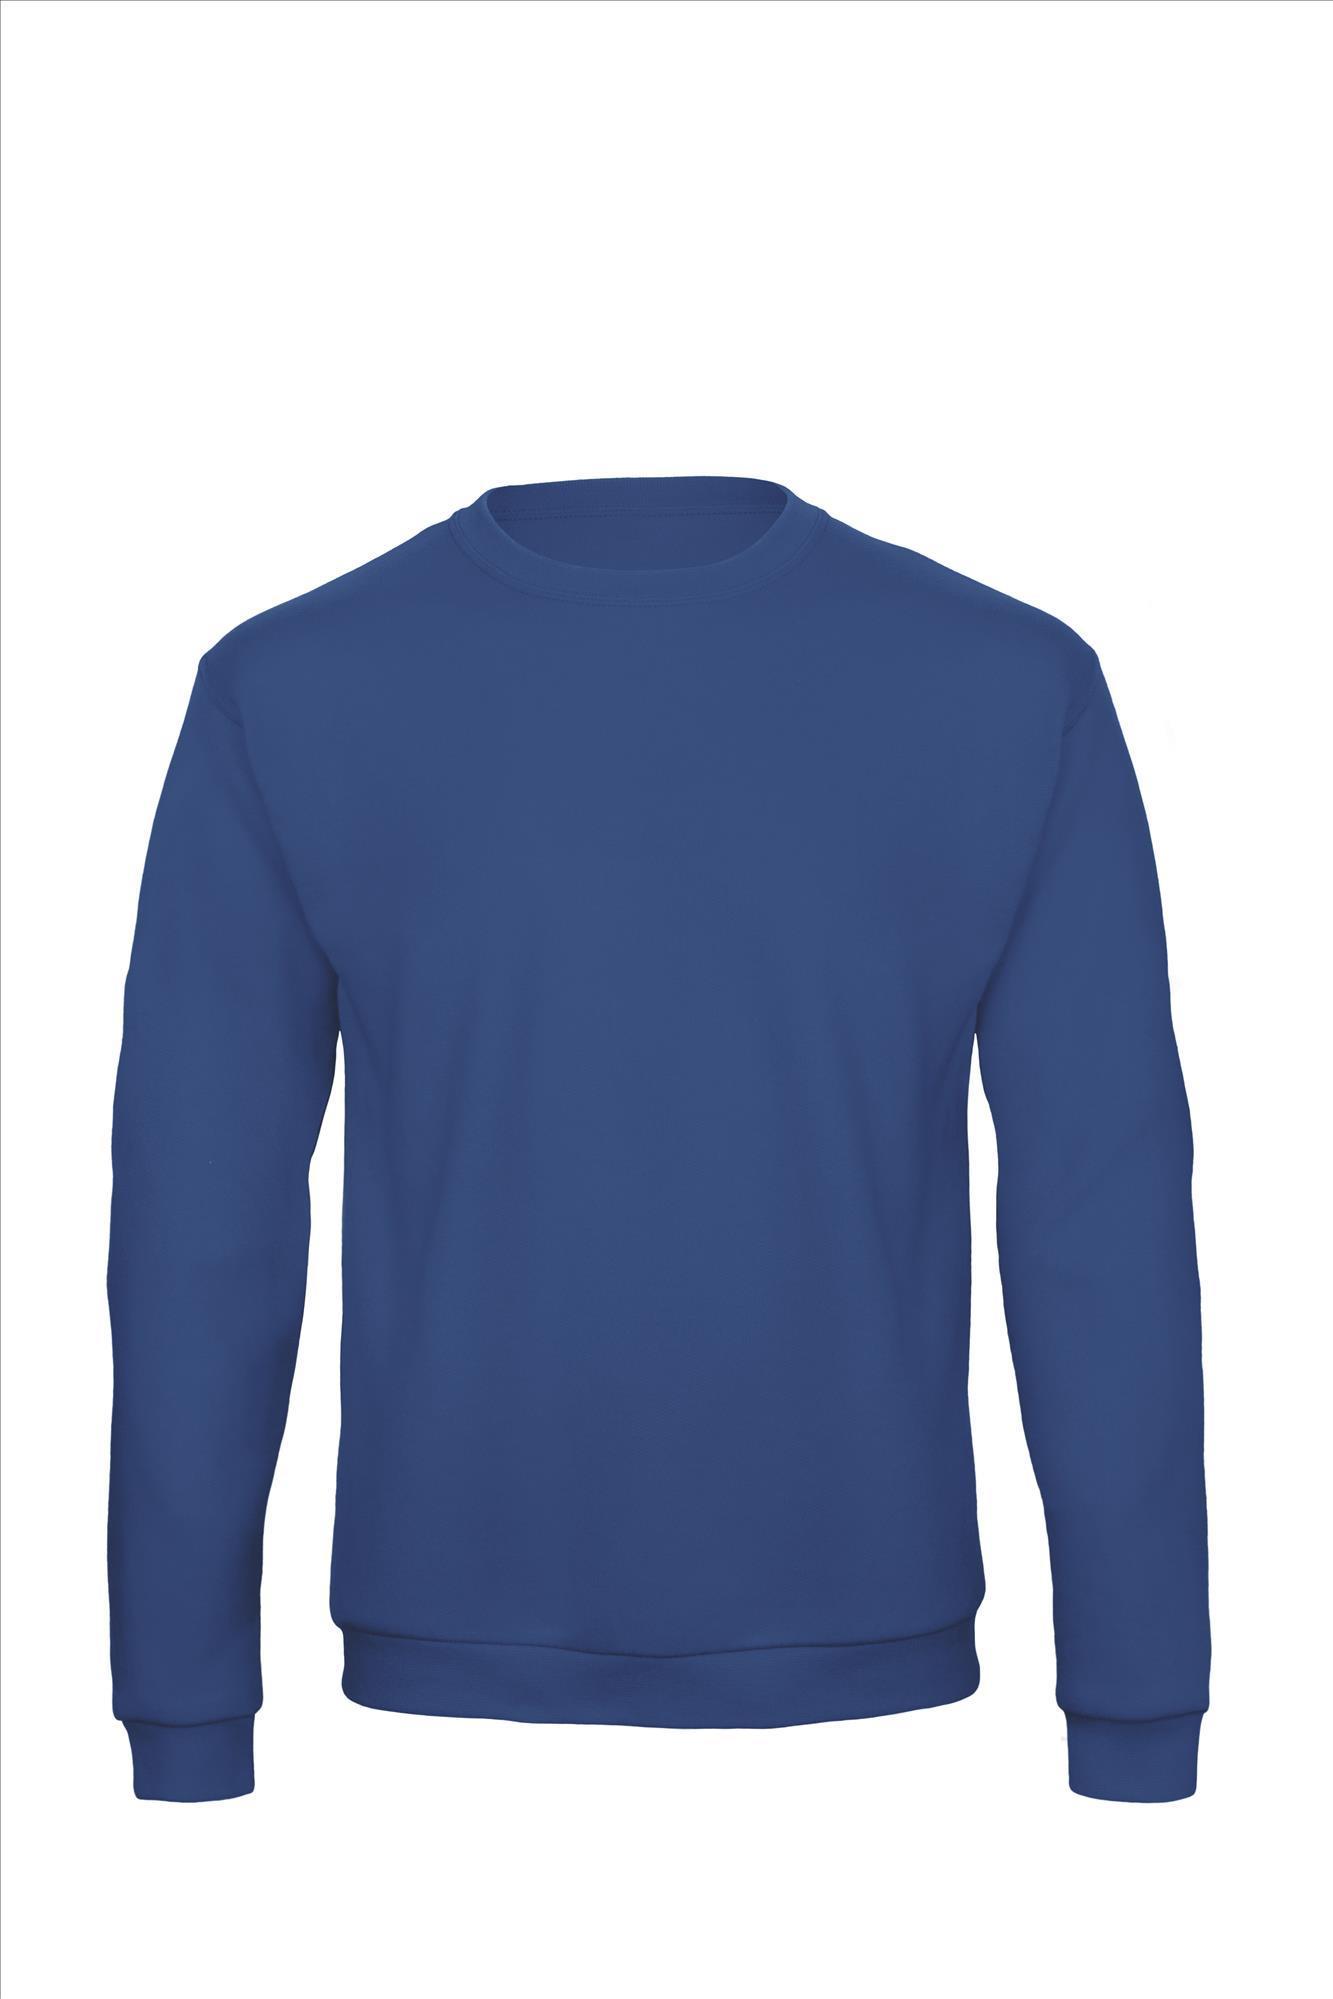 Sweater voor mannen budget blauw